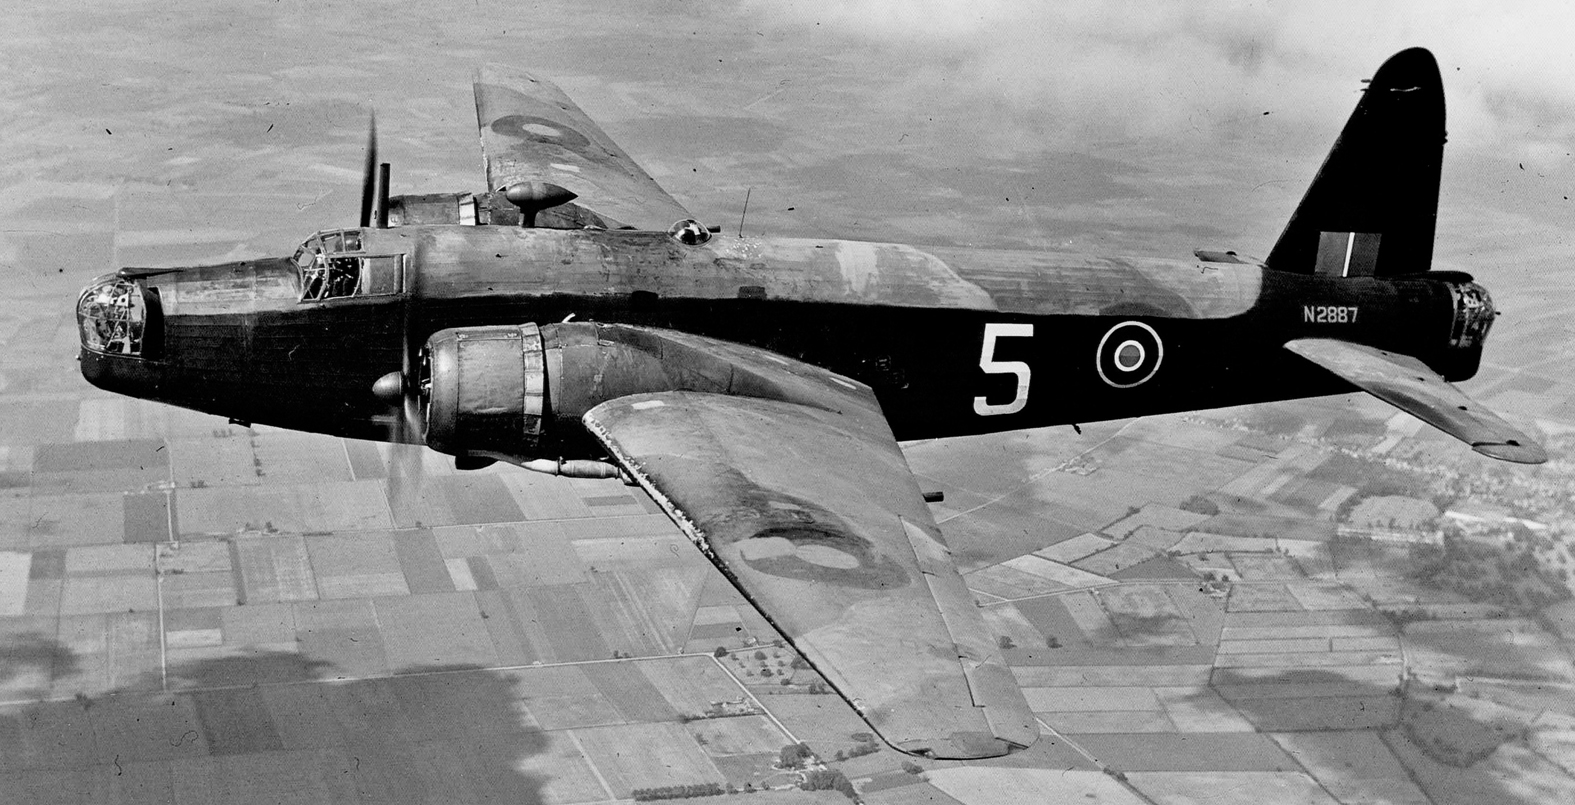 Wellington Bomber flying over English countryside